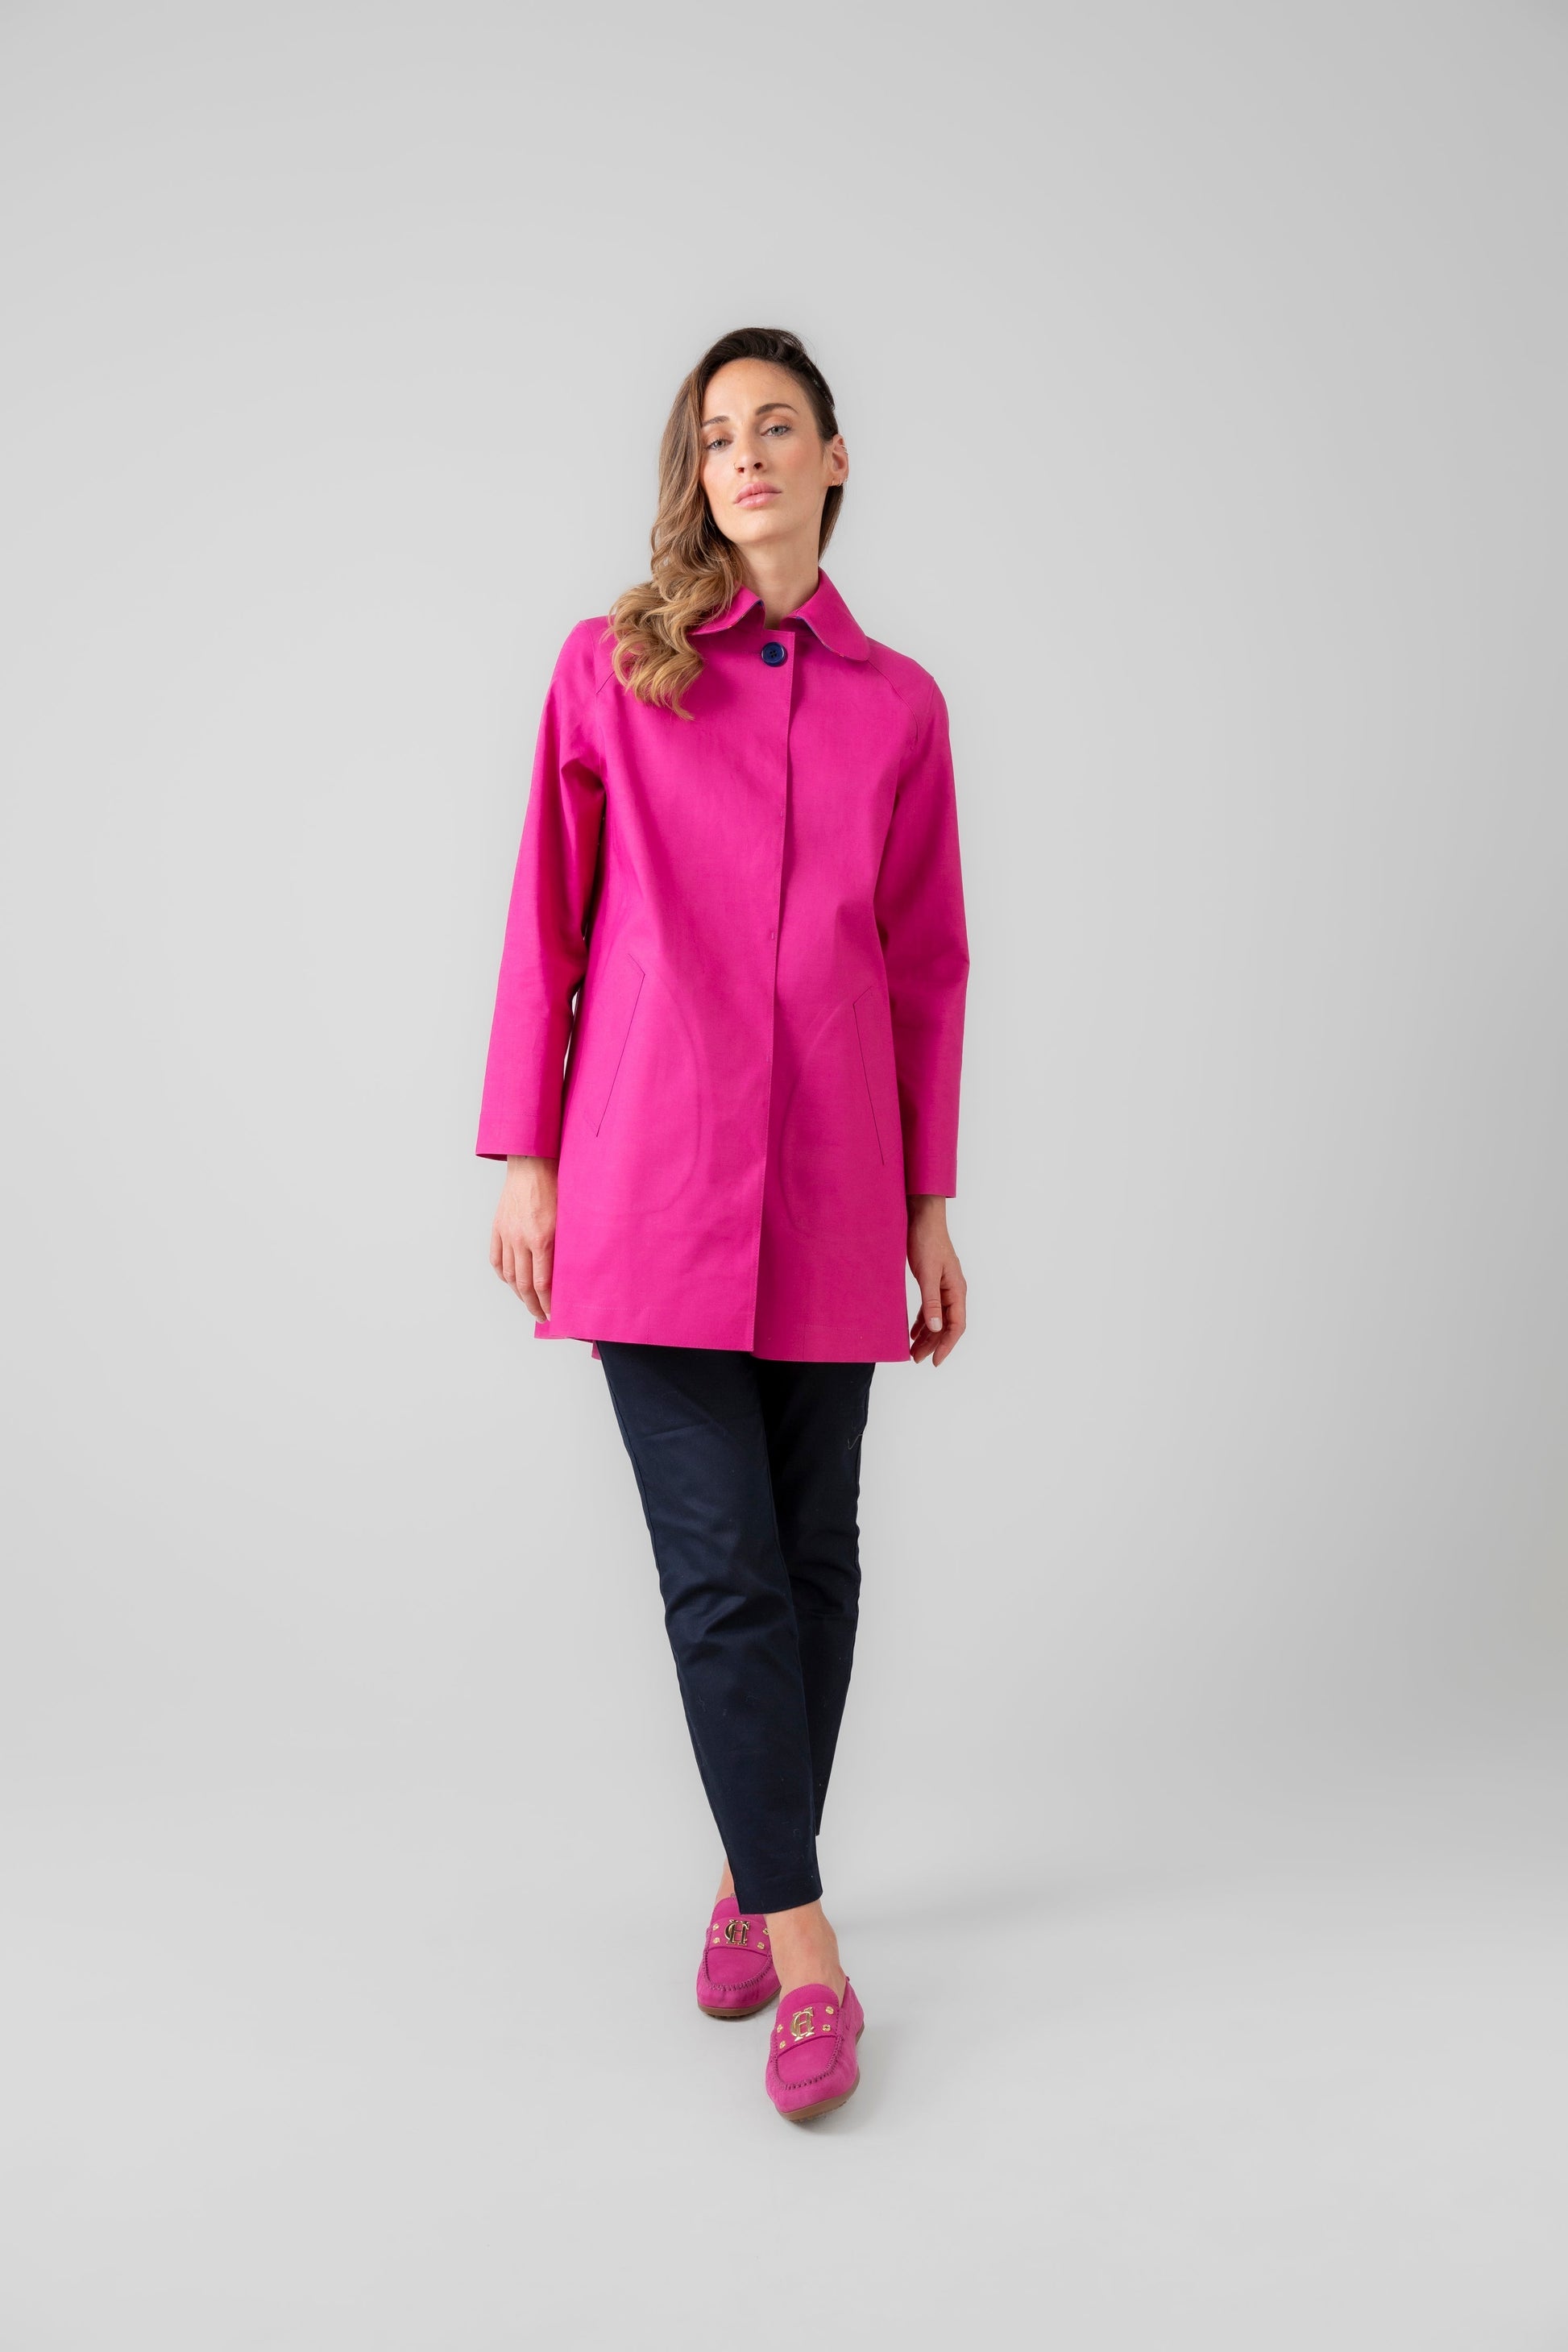 Article 9 pea coat - pink Tailored Coats HANCOCK OF SCOTLAND